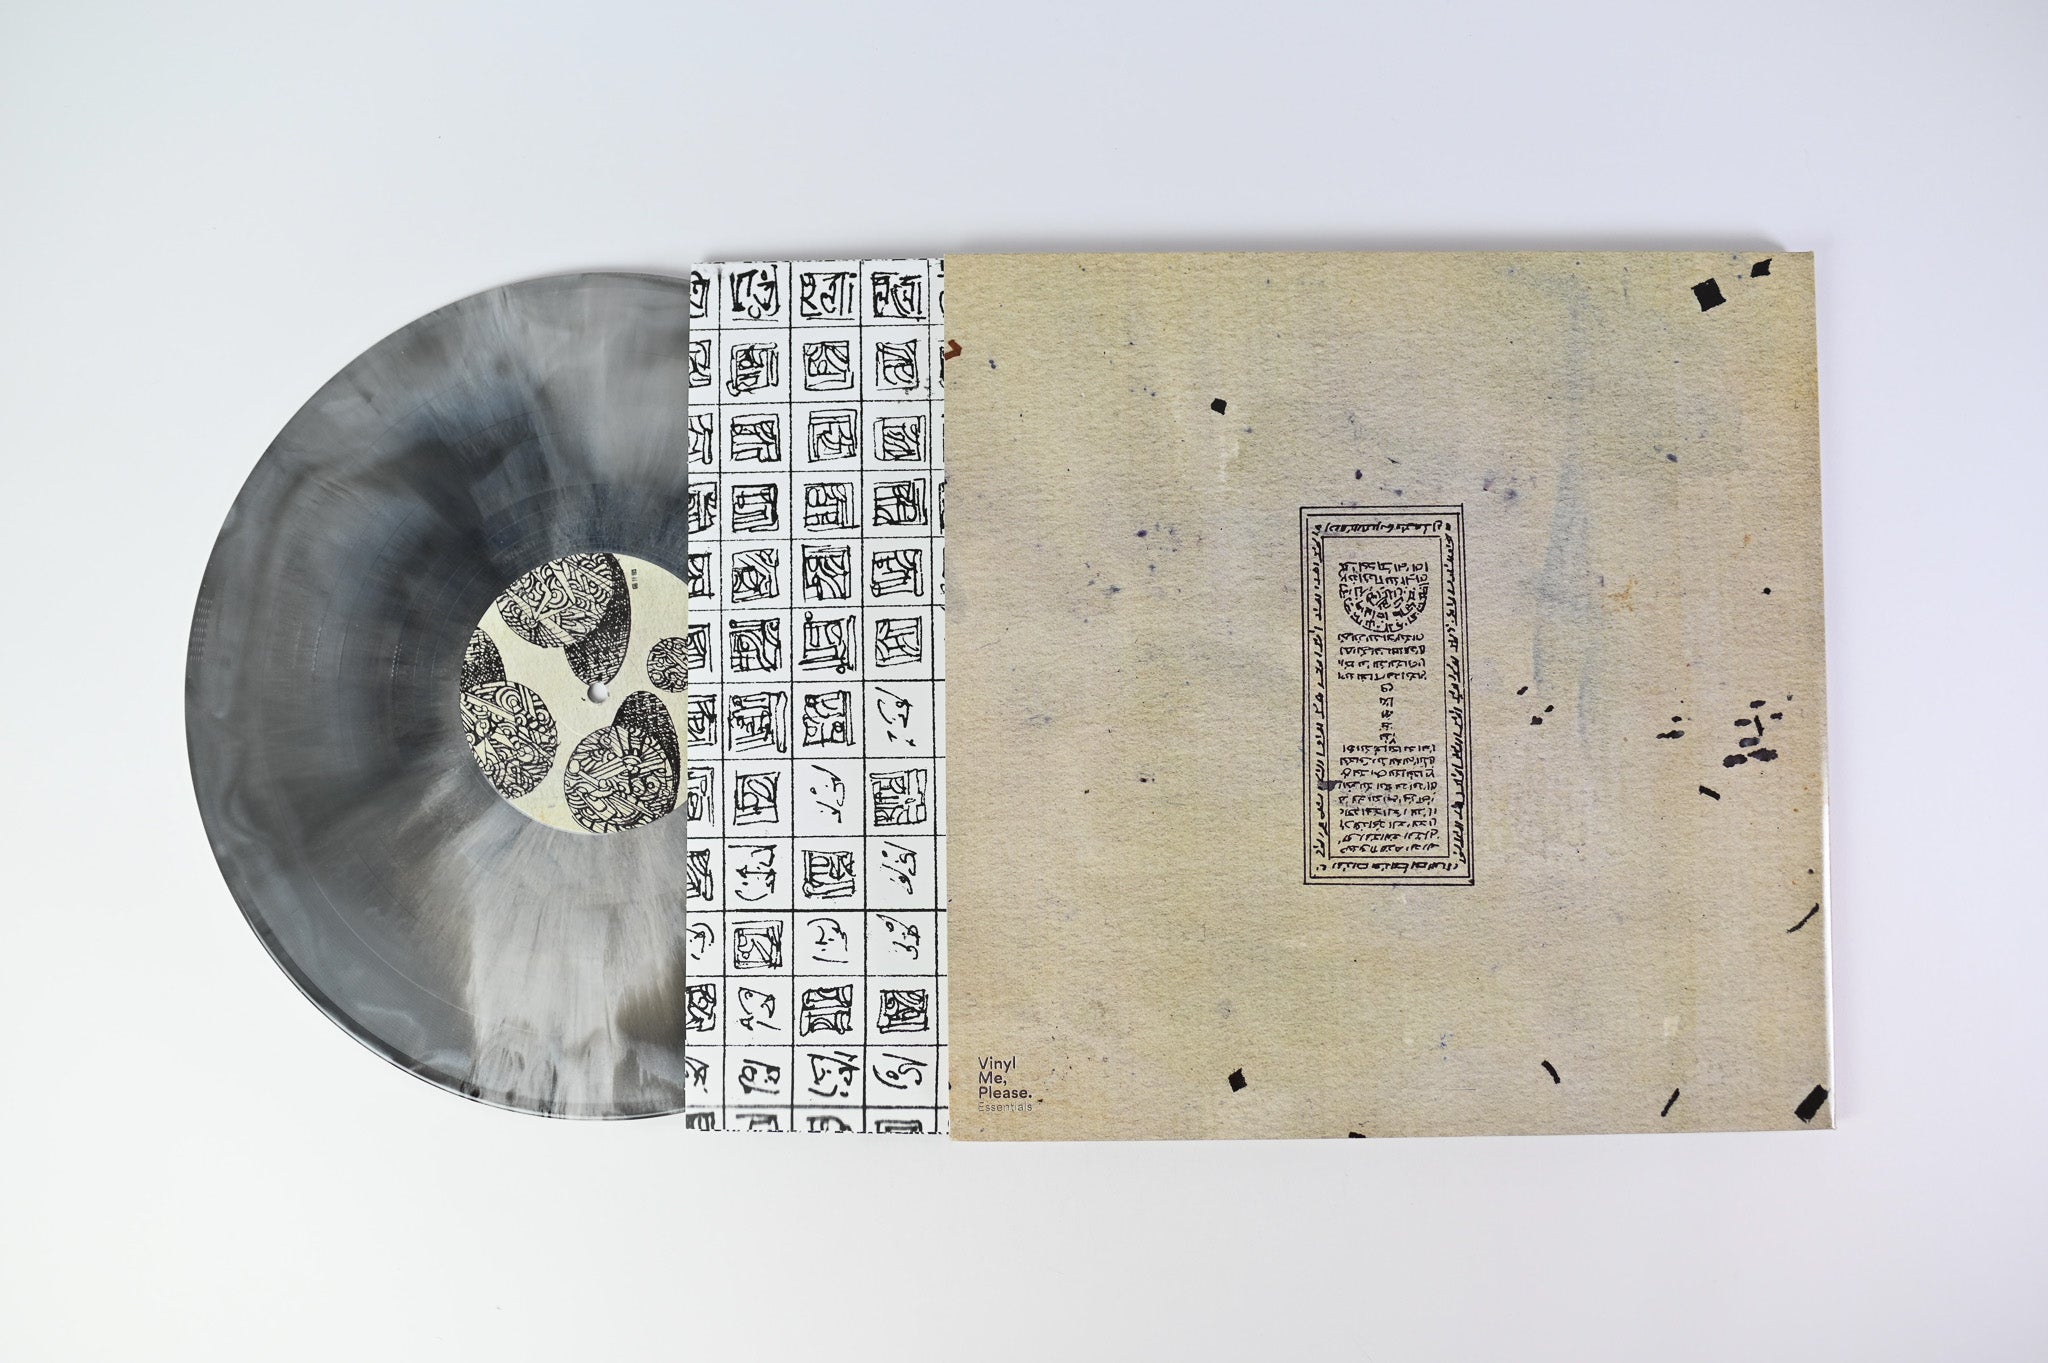 Flying Lotus - Cosmogramma Vinyl Me Please Black / White Marble Reissue